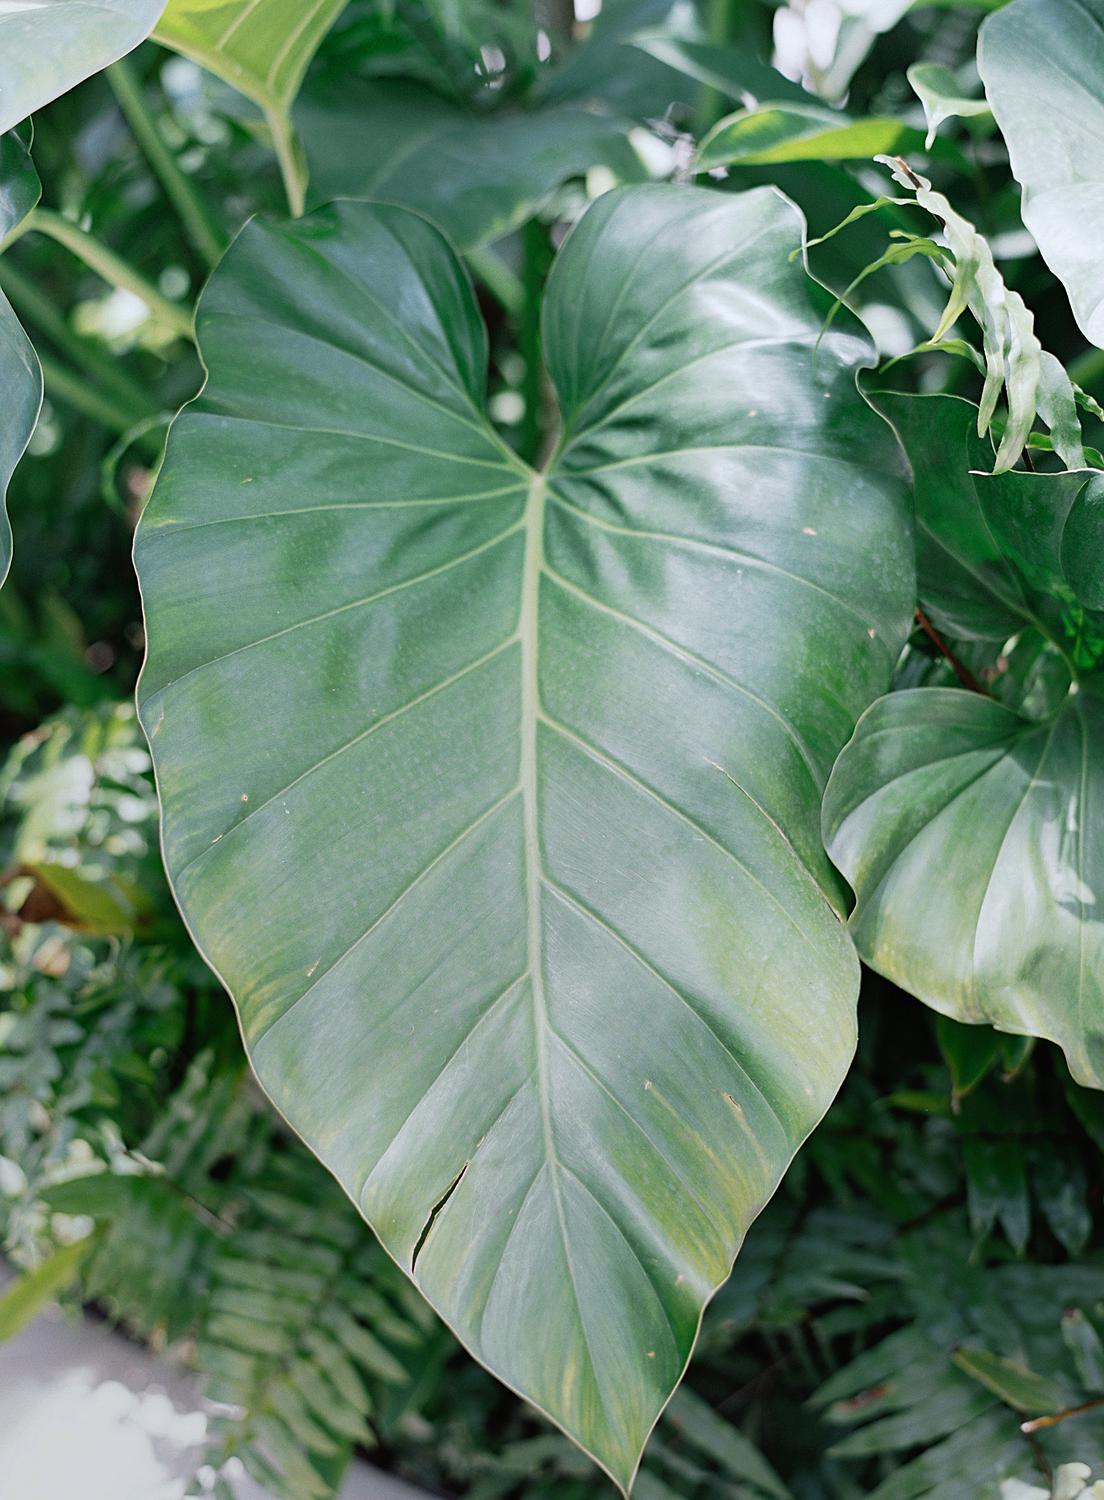 Large banana leaf.